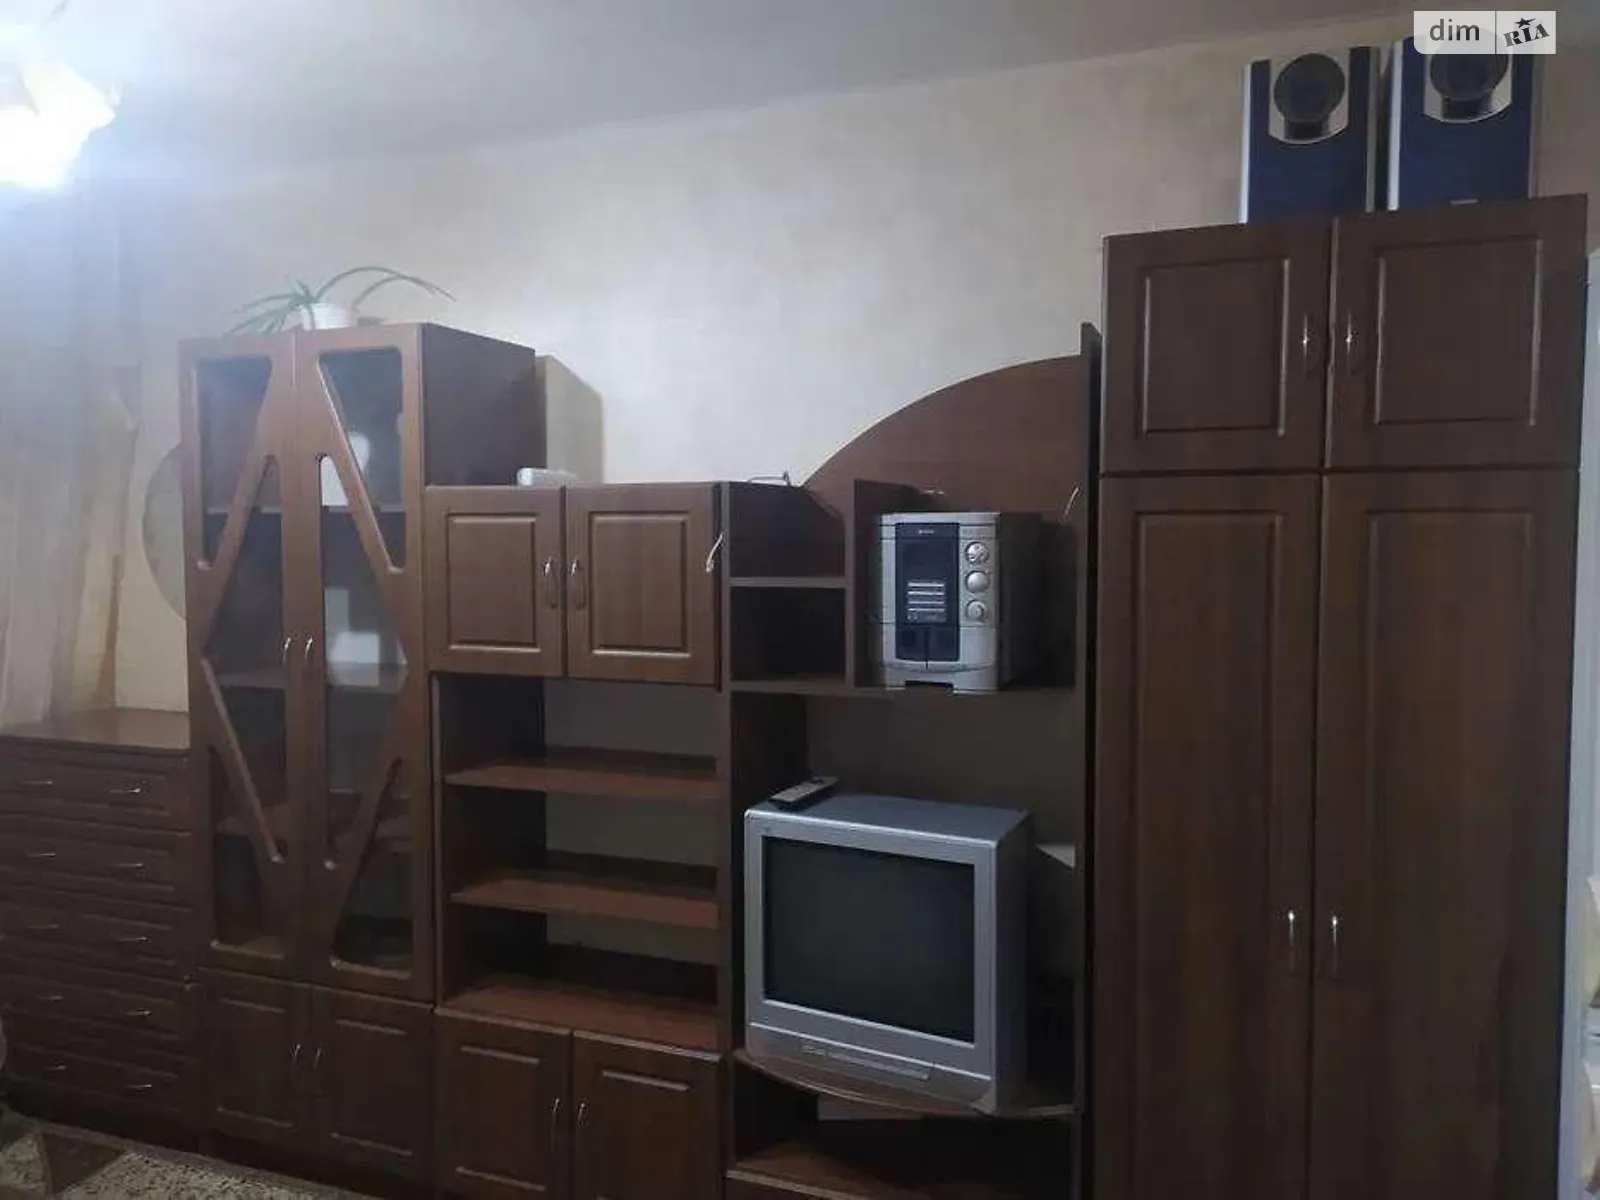 Продается комната 100 кв. м в Киеве, цена: 15000 $ - фото 1